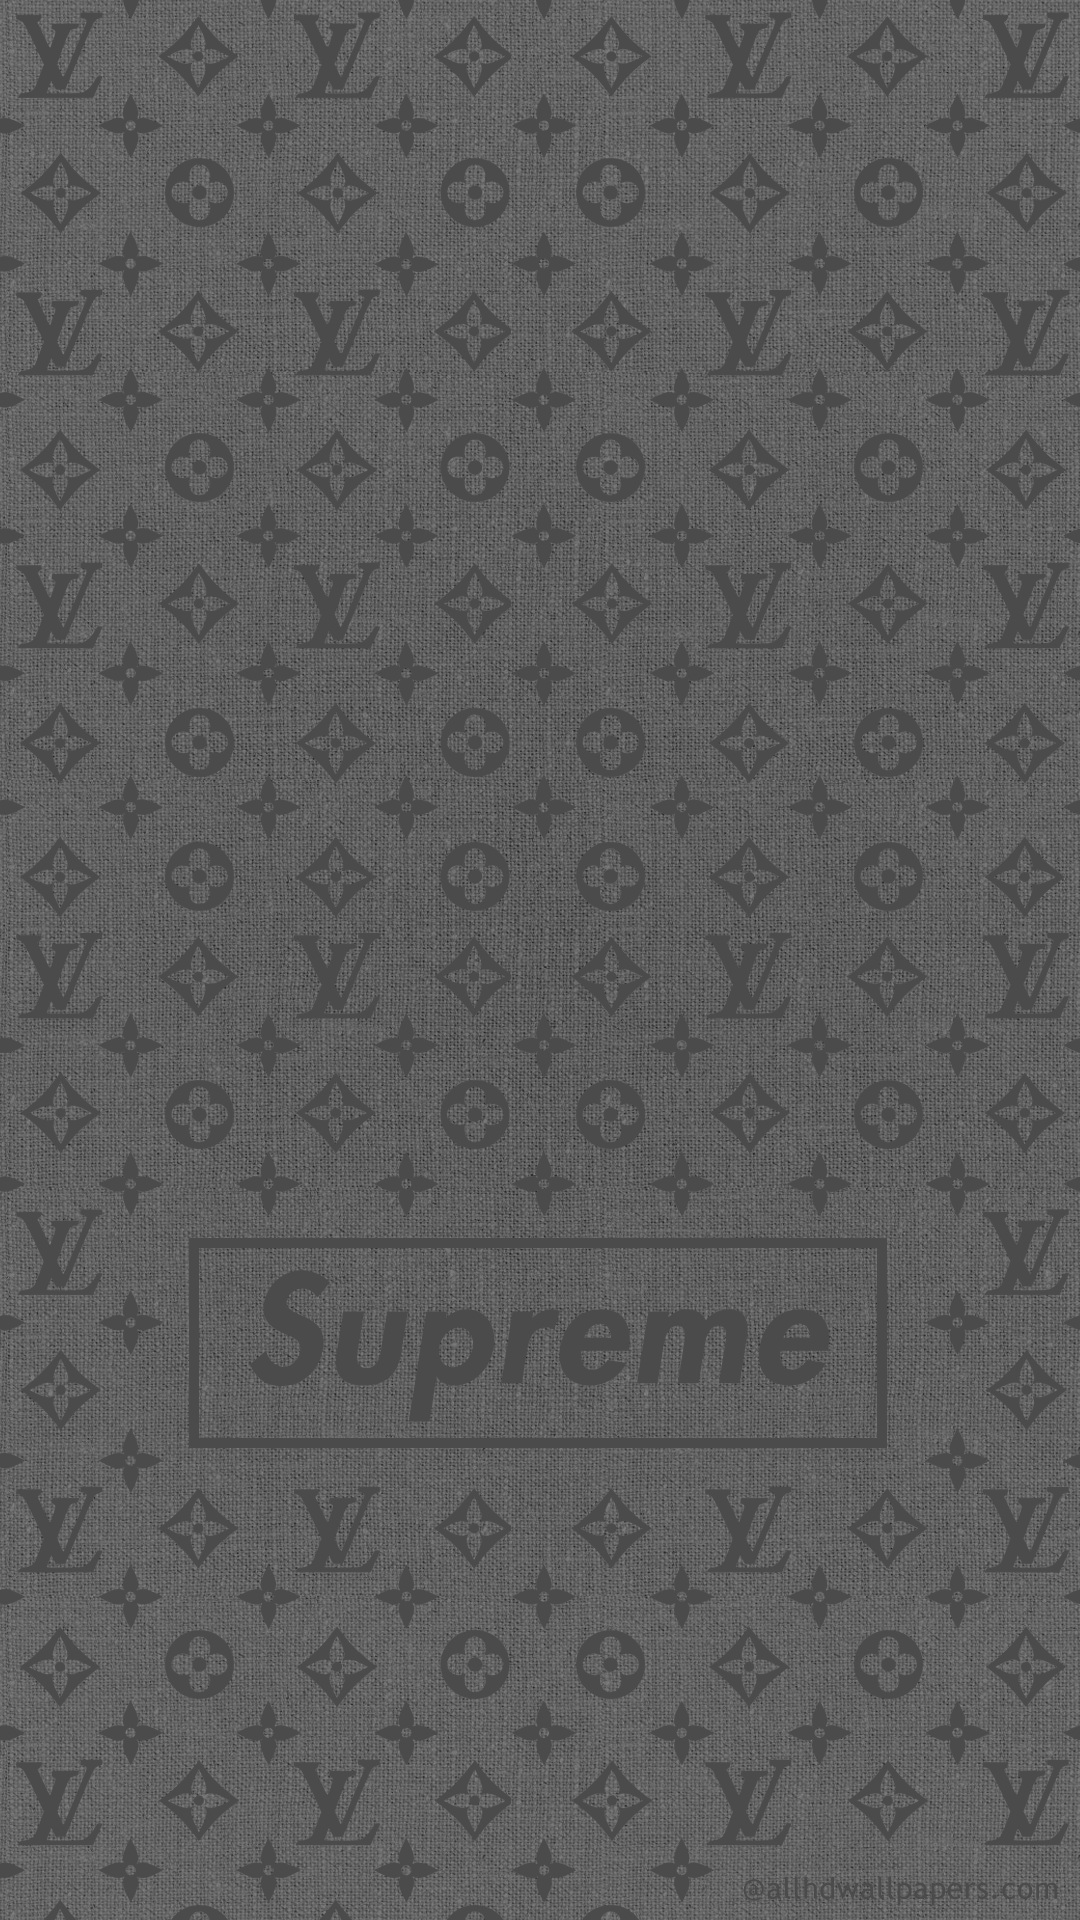 70 Supreme Wallpapers in 4K   AllHDWallpapers 1080x1920